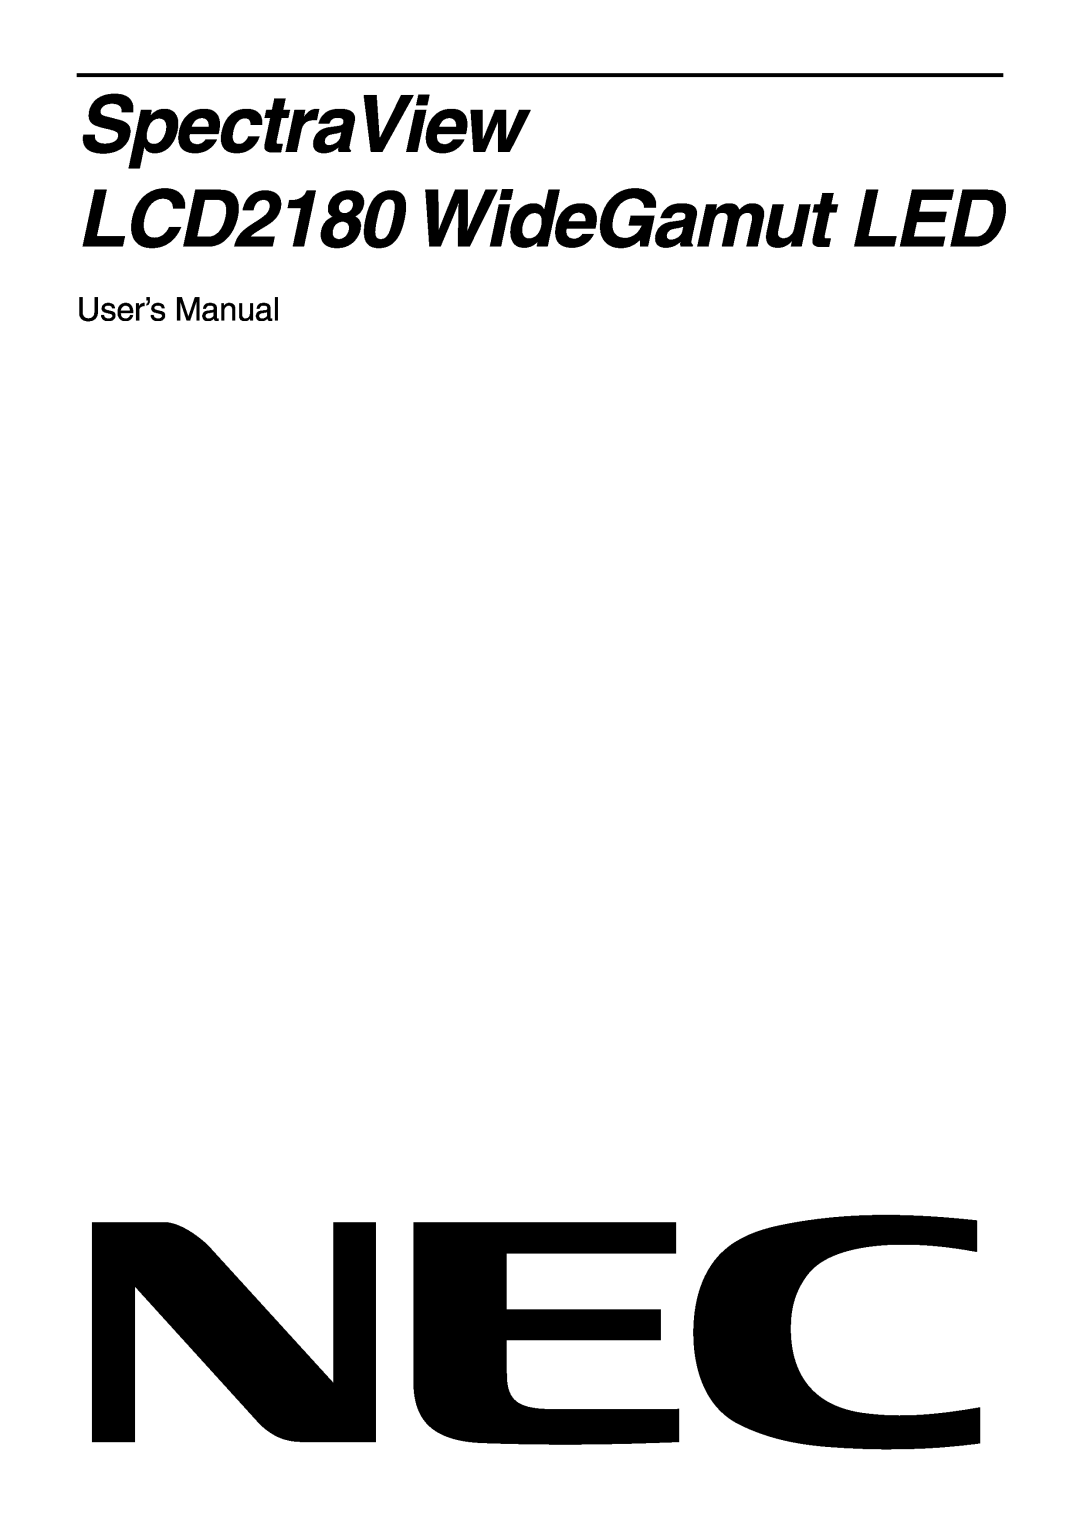 NEC user manual SpectraView LCD2180 WideGamut LED, User’s Manual 